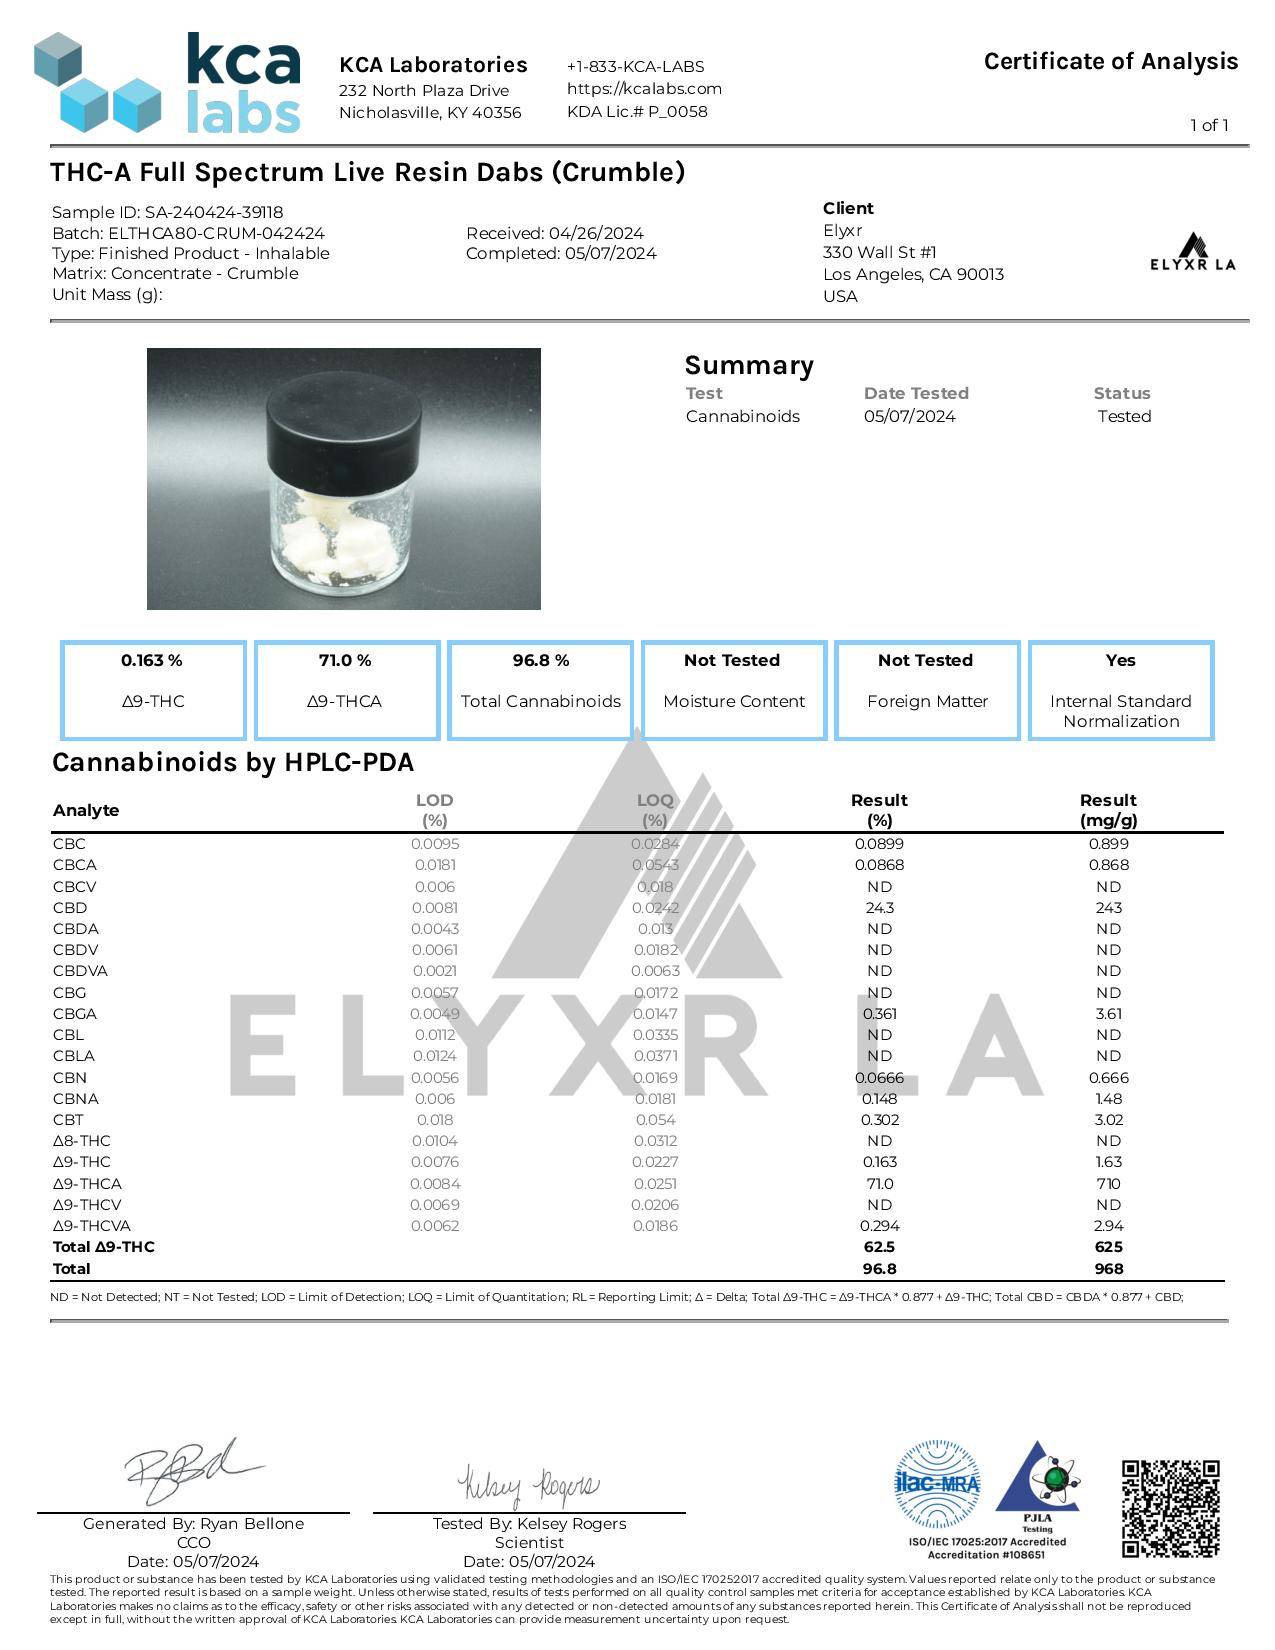 SA-231026-29054 Elyxr Muscimol 26 THC-A Disposable A-page-001